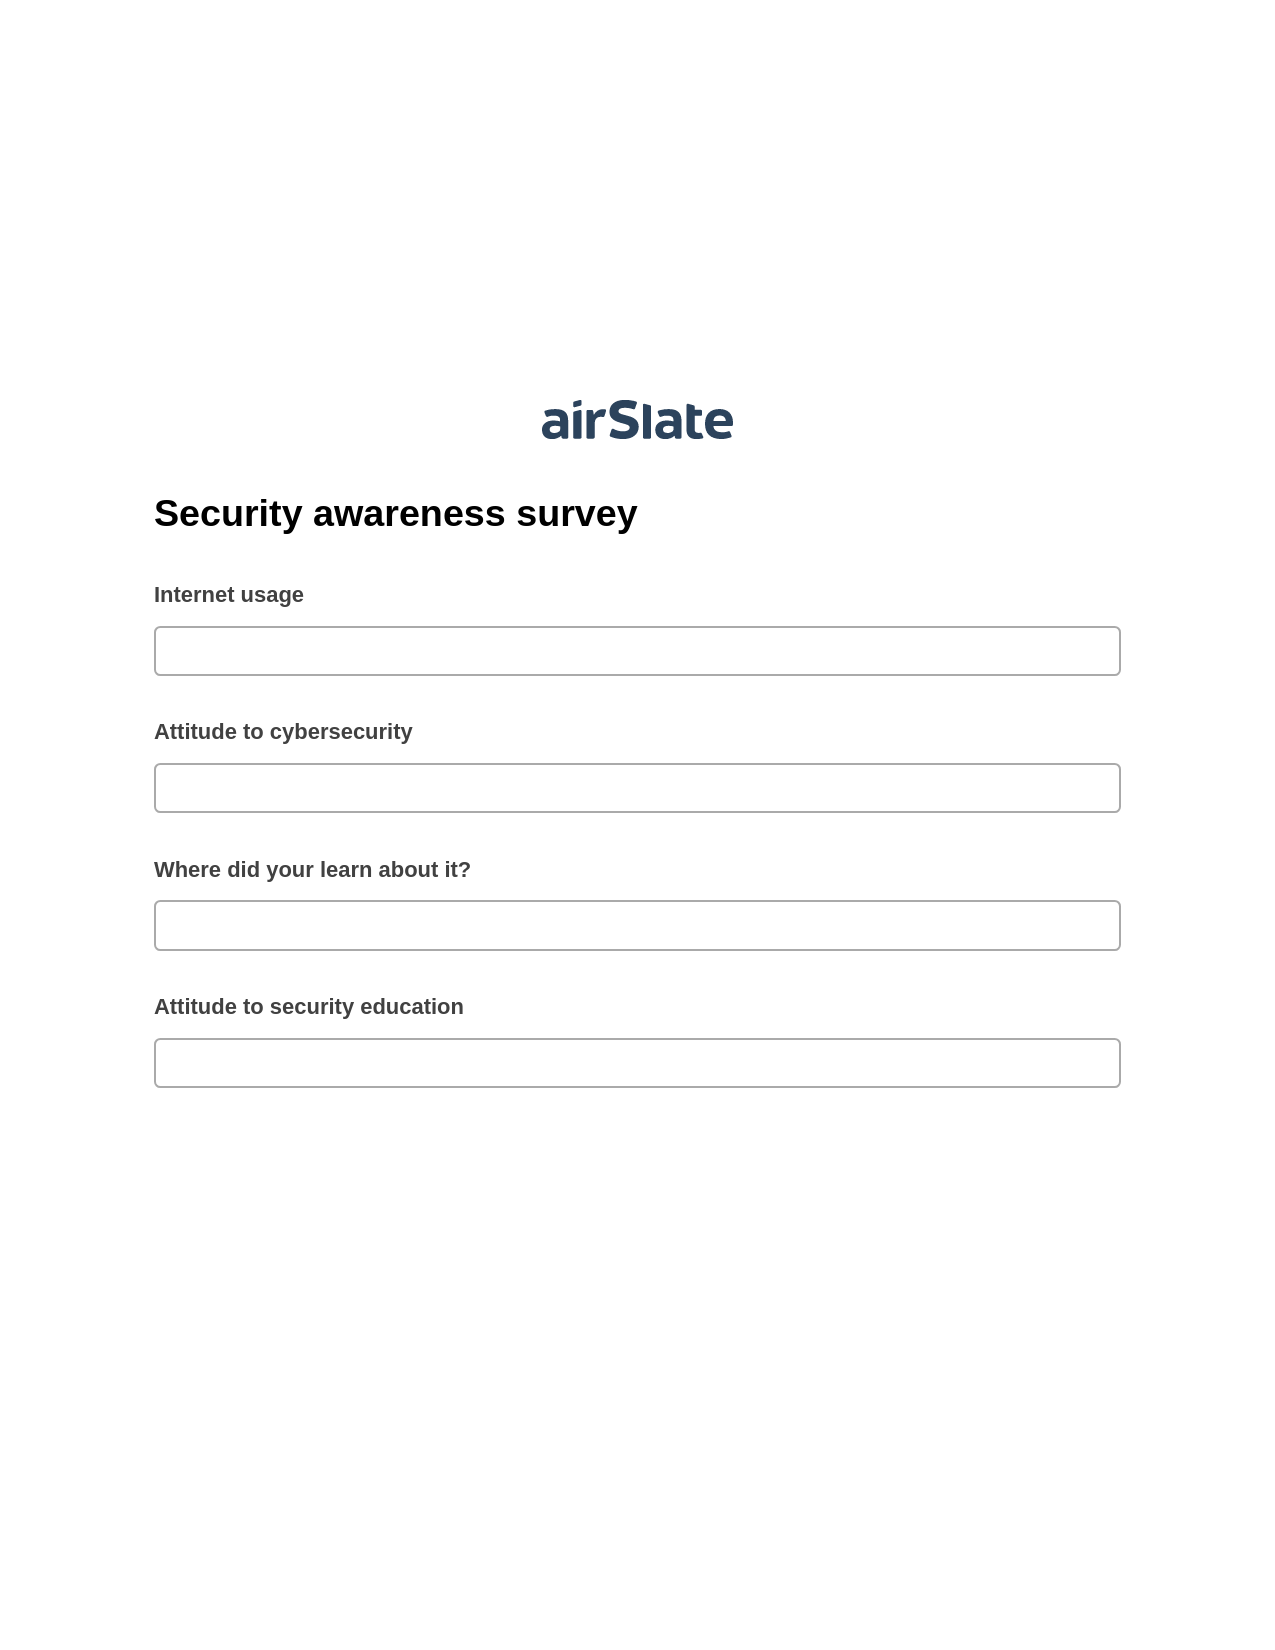 Multirole Security awareness survey Pre-fill from Salesforce Record Bot, Invoke Salesforce Process Bot, Export to Google Sheet Bot